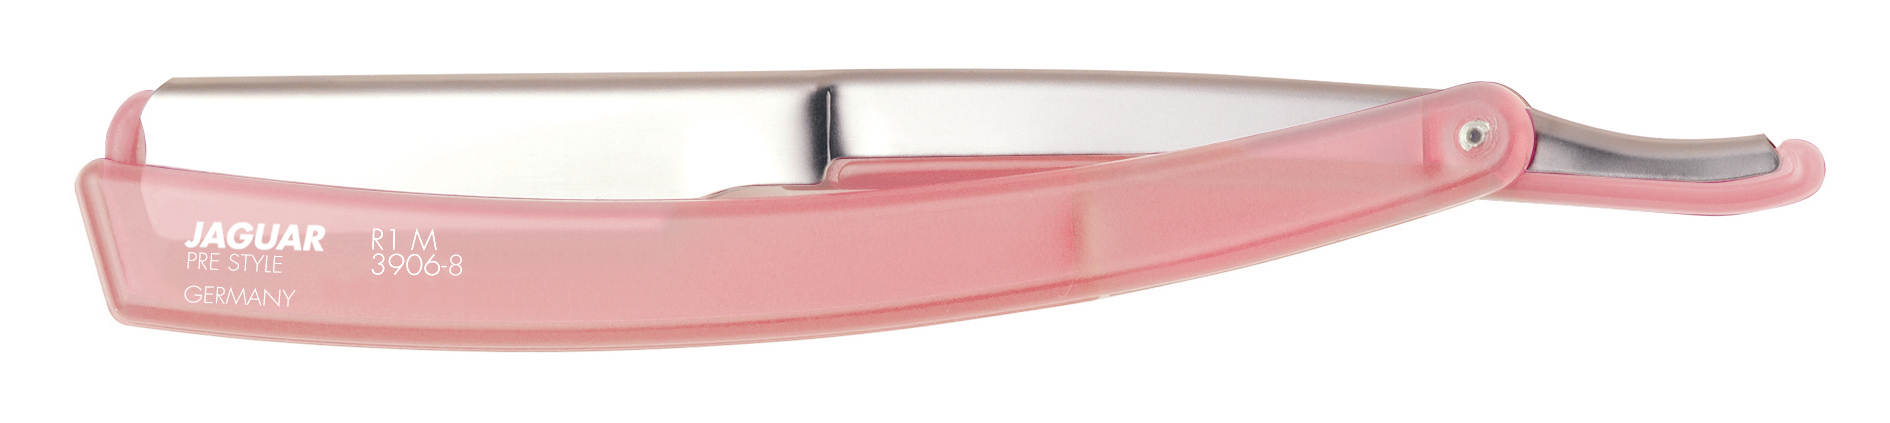 R1 M Rosé frisörkniv